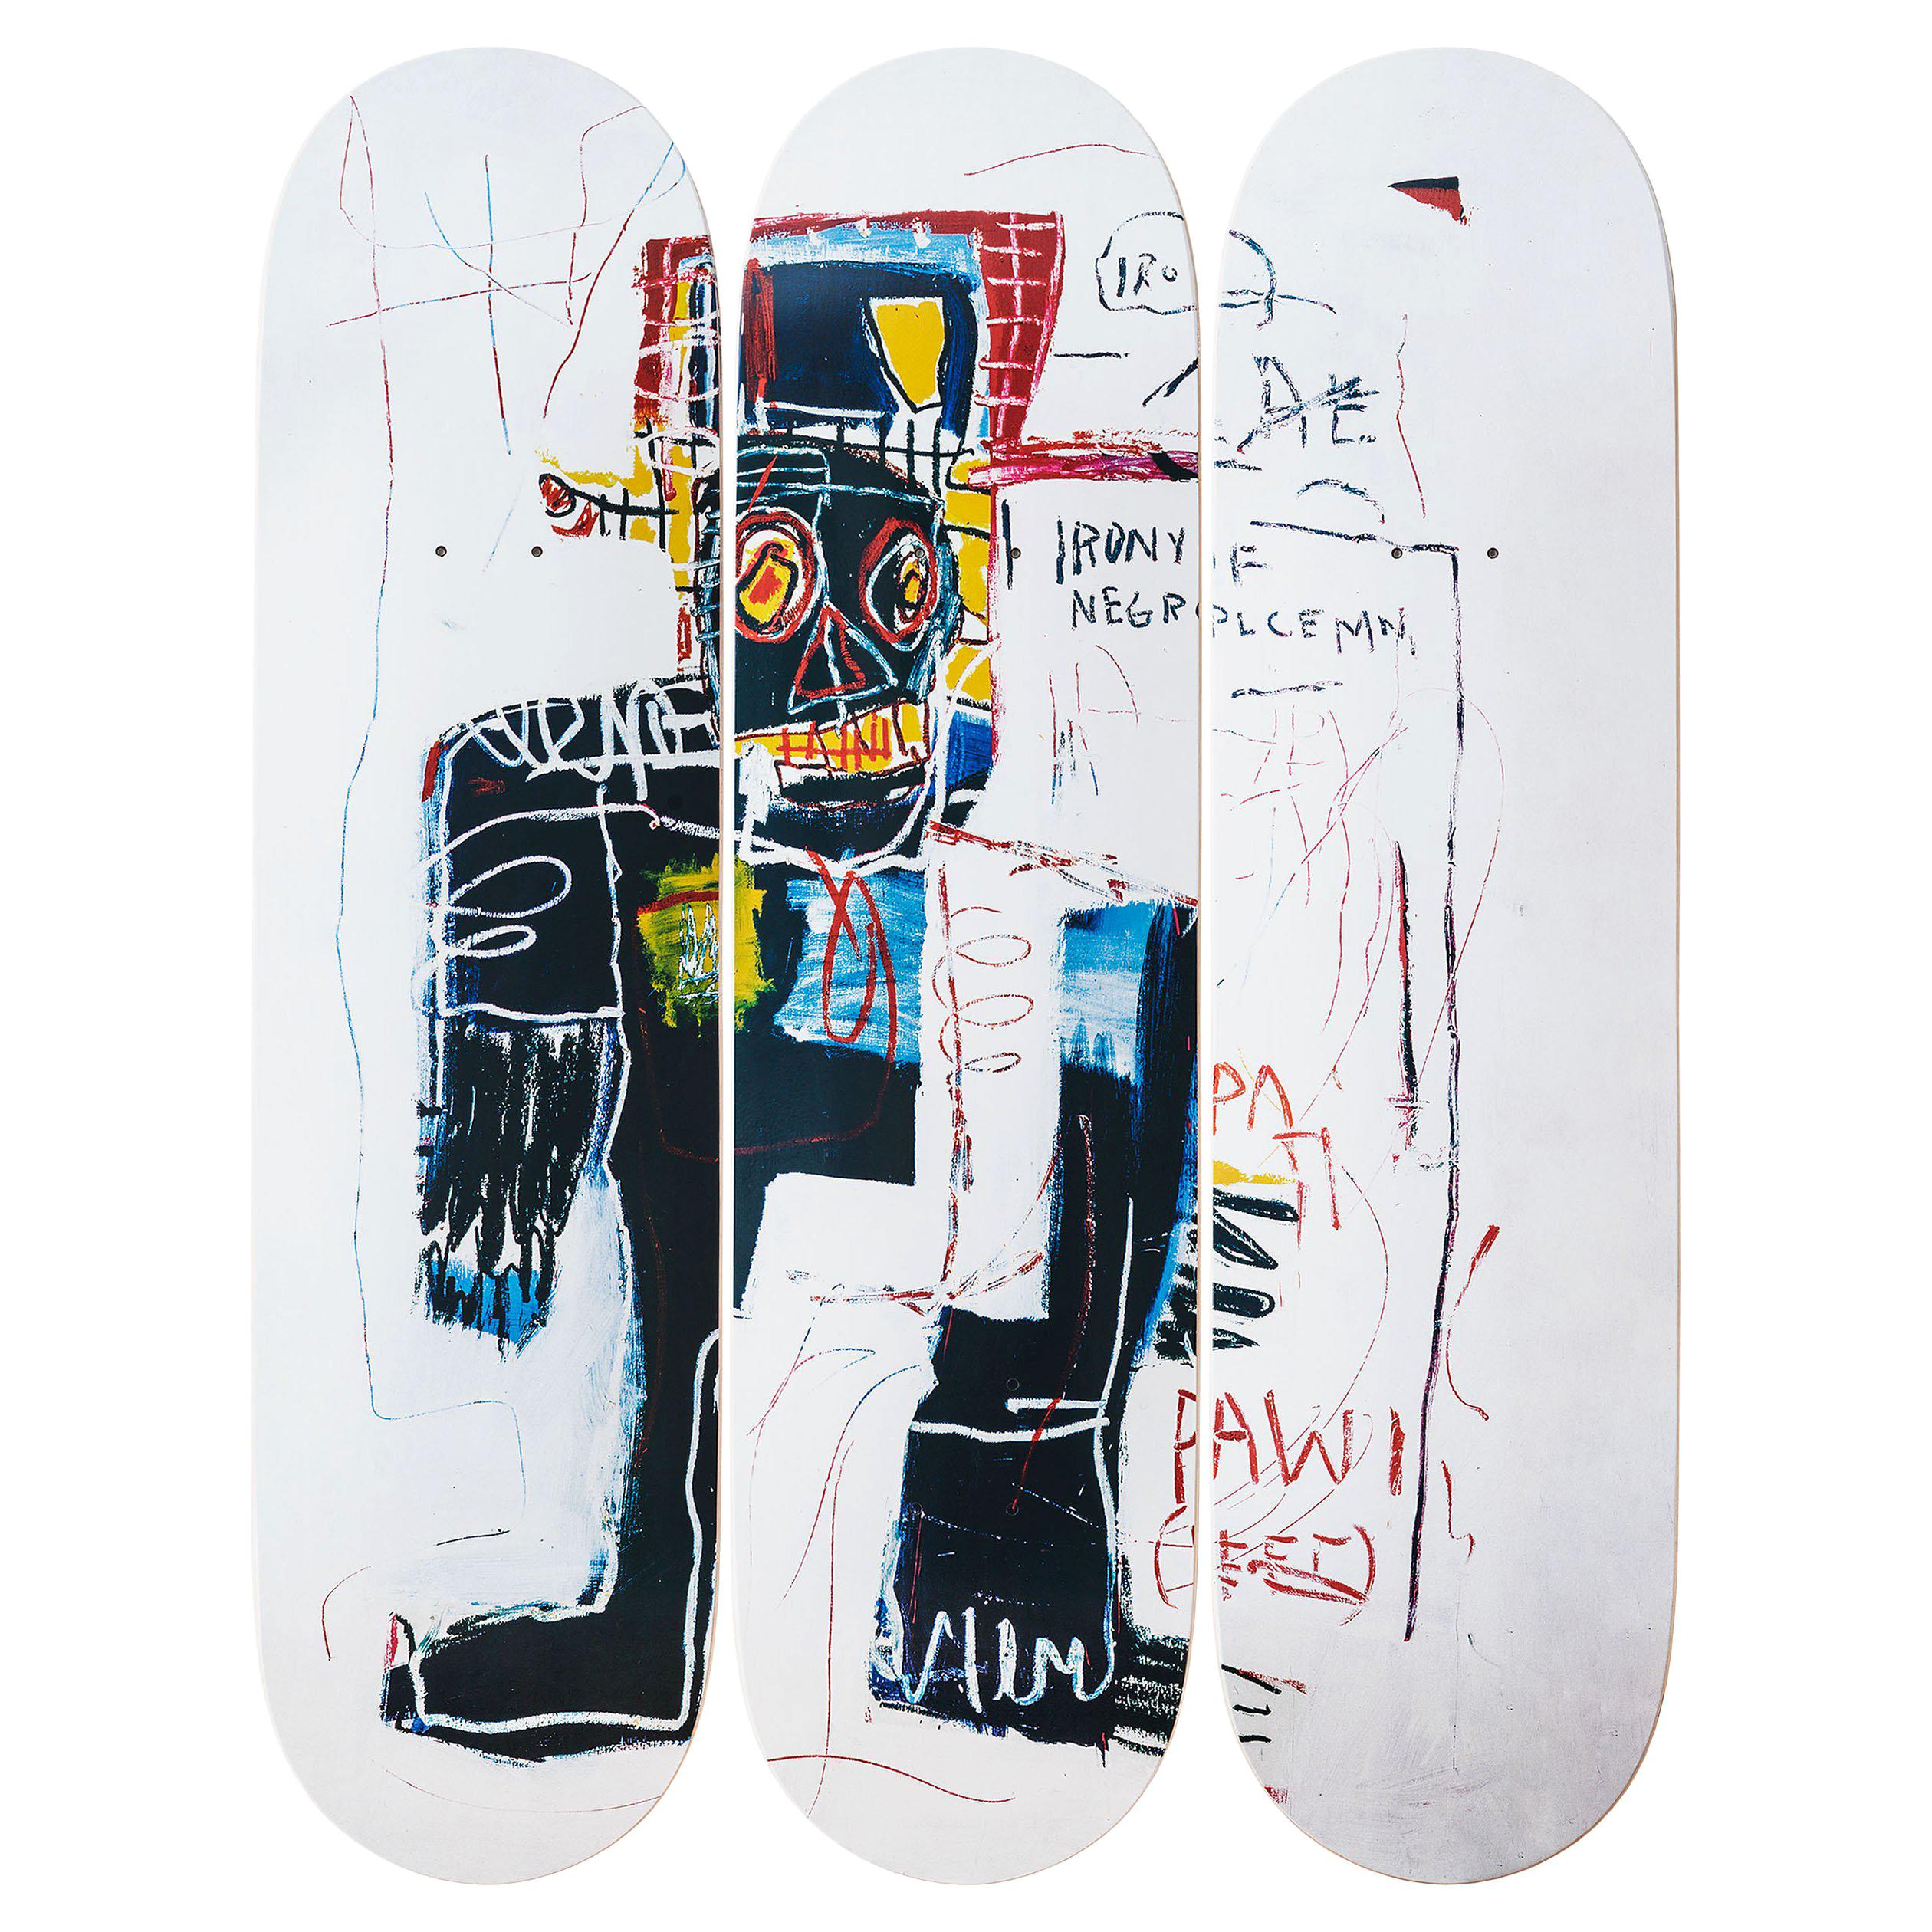 Irony of a Negro Policeman Skateboard Decks After Jean-Michel Basquiat